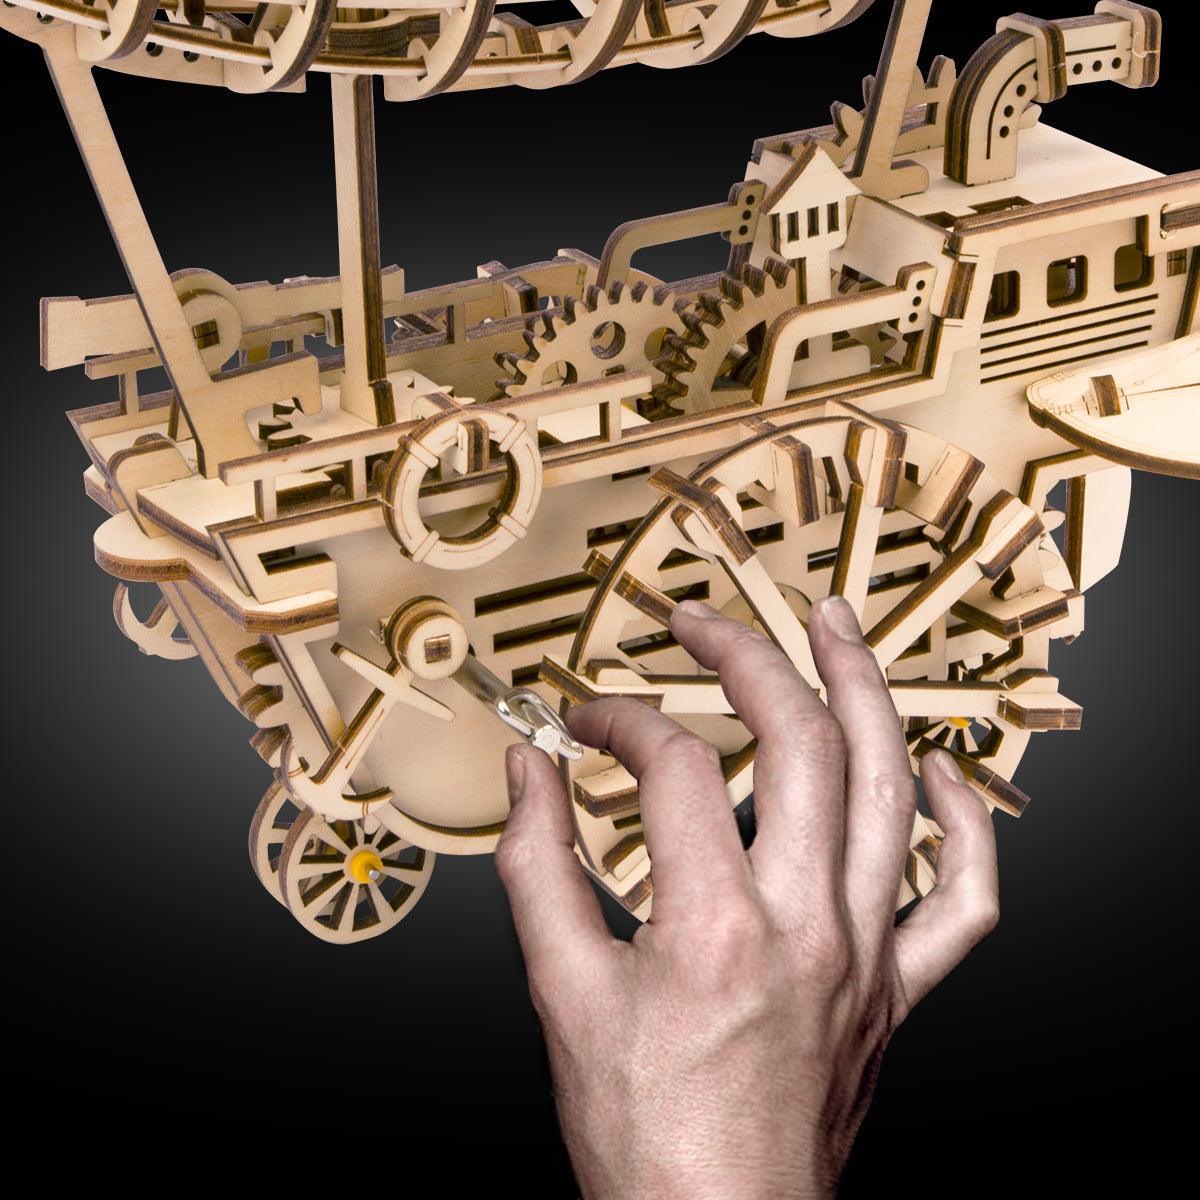 3D Mechanical Wooden Puzzle | Air Vehicle